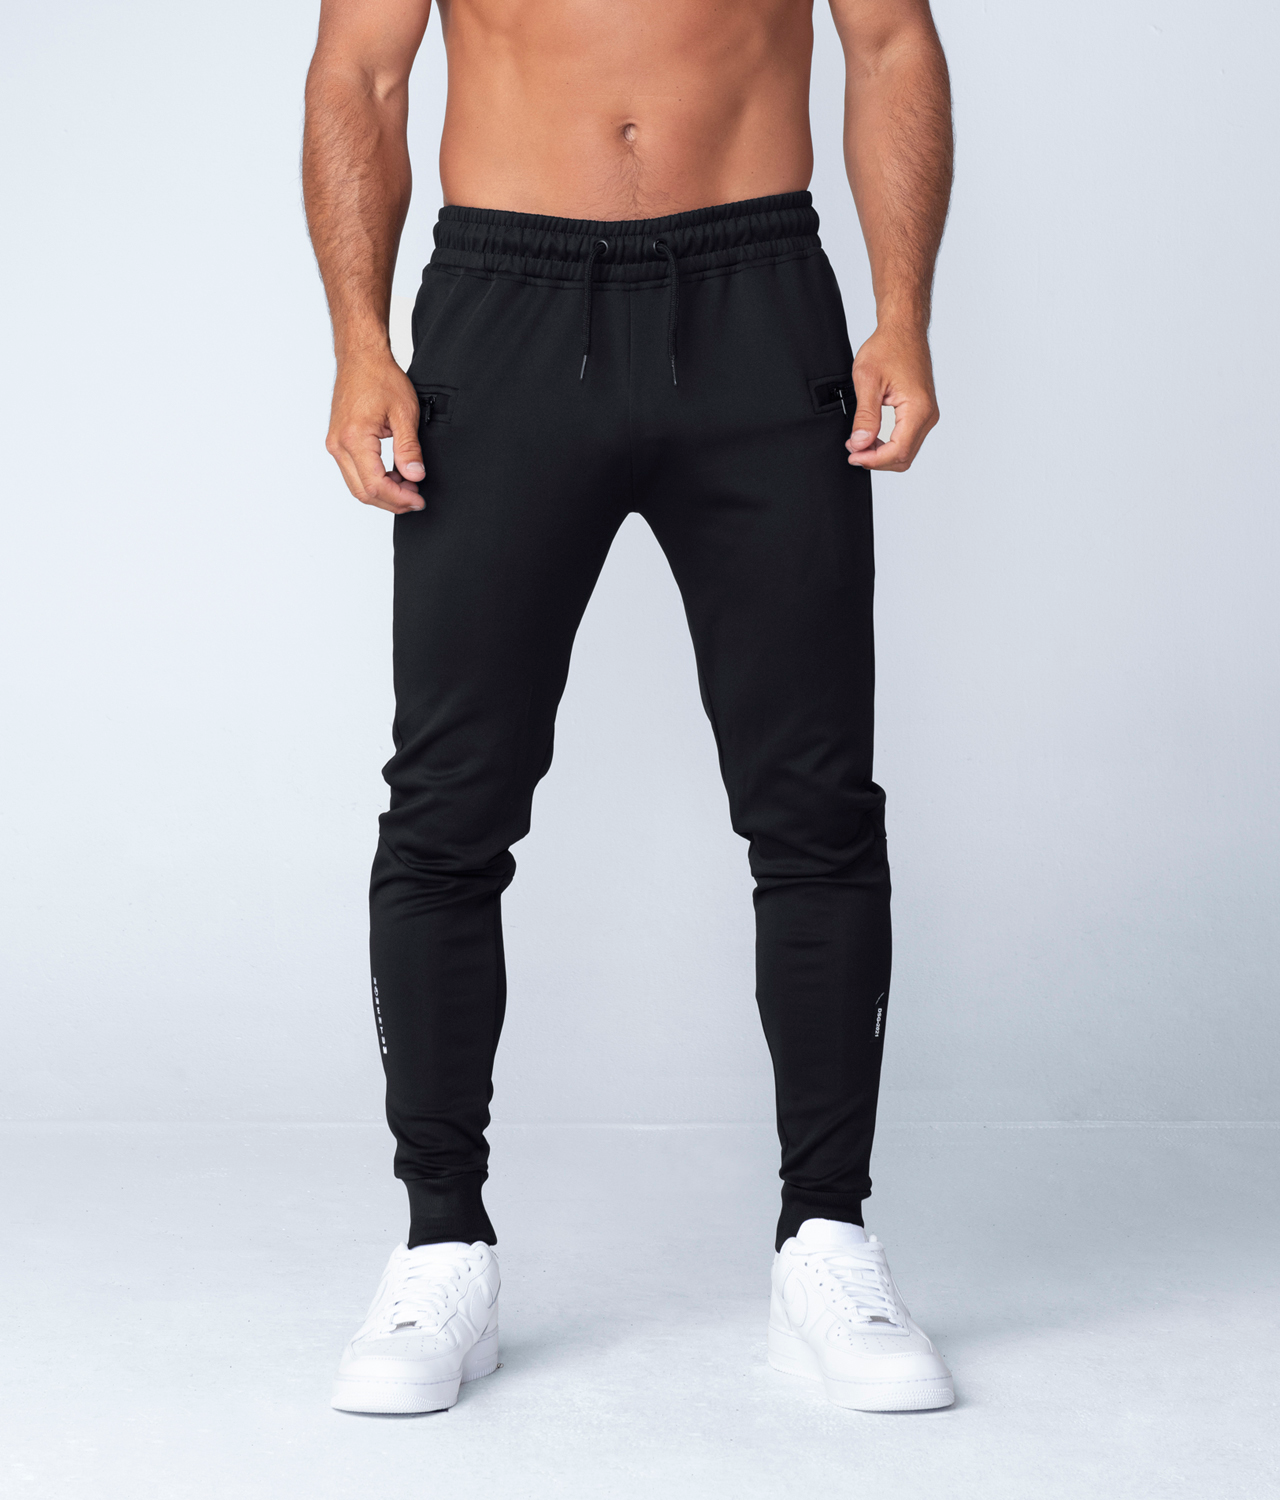 Buy MILLIONSTORE Regular FIt Hip Hop Cargo Harem Pants for Men Multi-Pocket  Cargo Pants Loose Casual Trousers (34-36) Black at Amazon.in